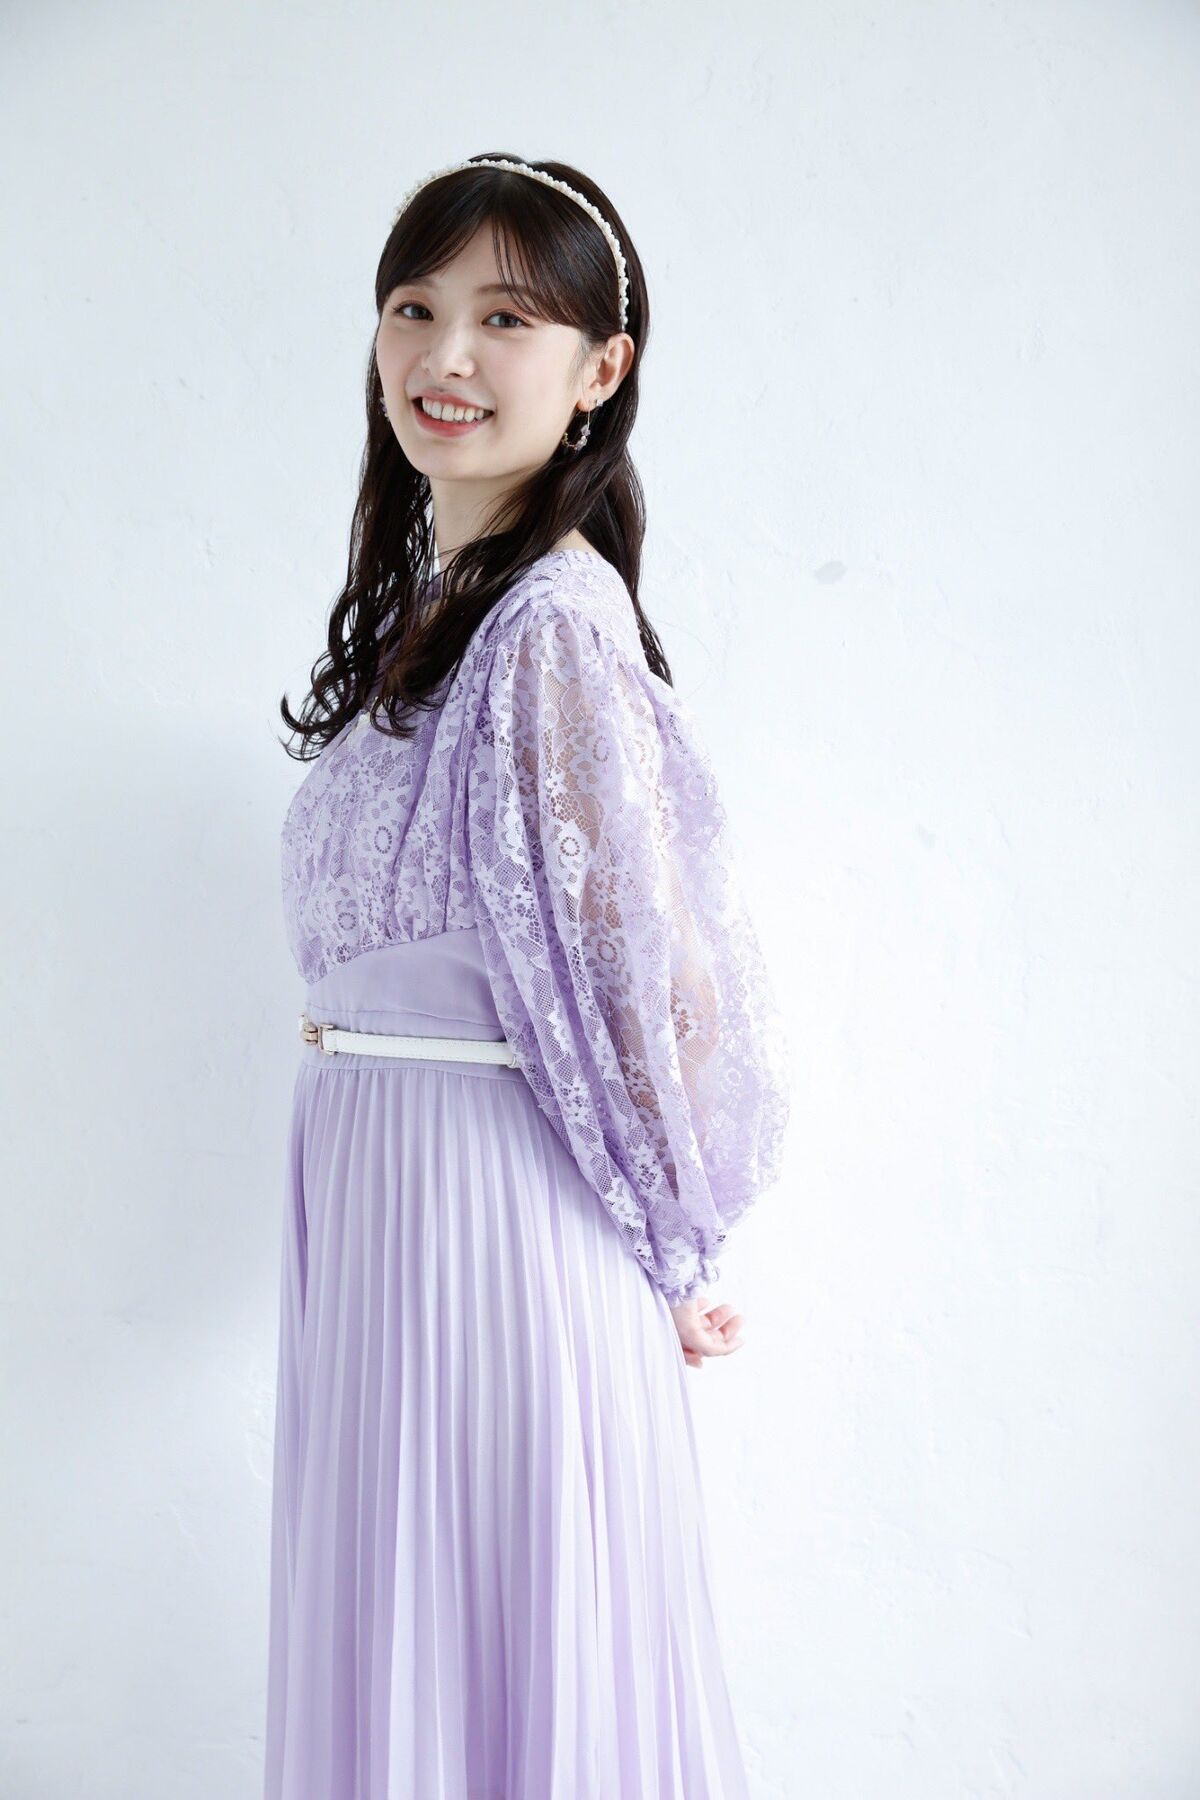 Muto Tomu | AKB48 Wiki | Fandom